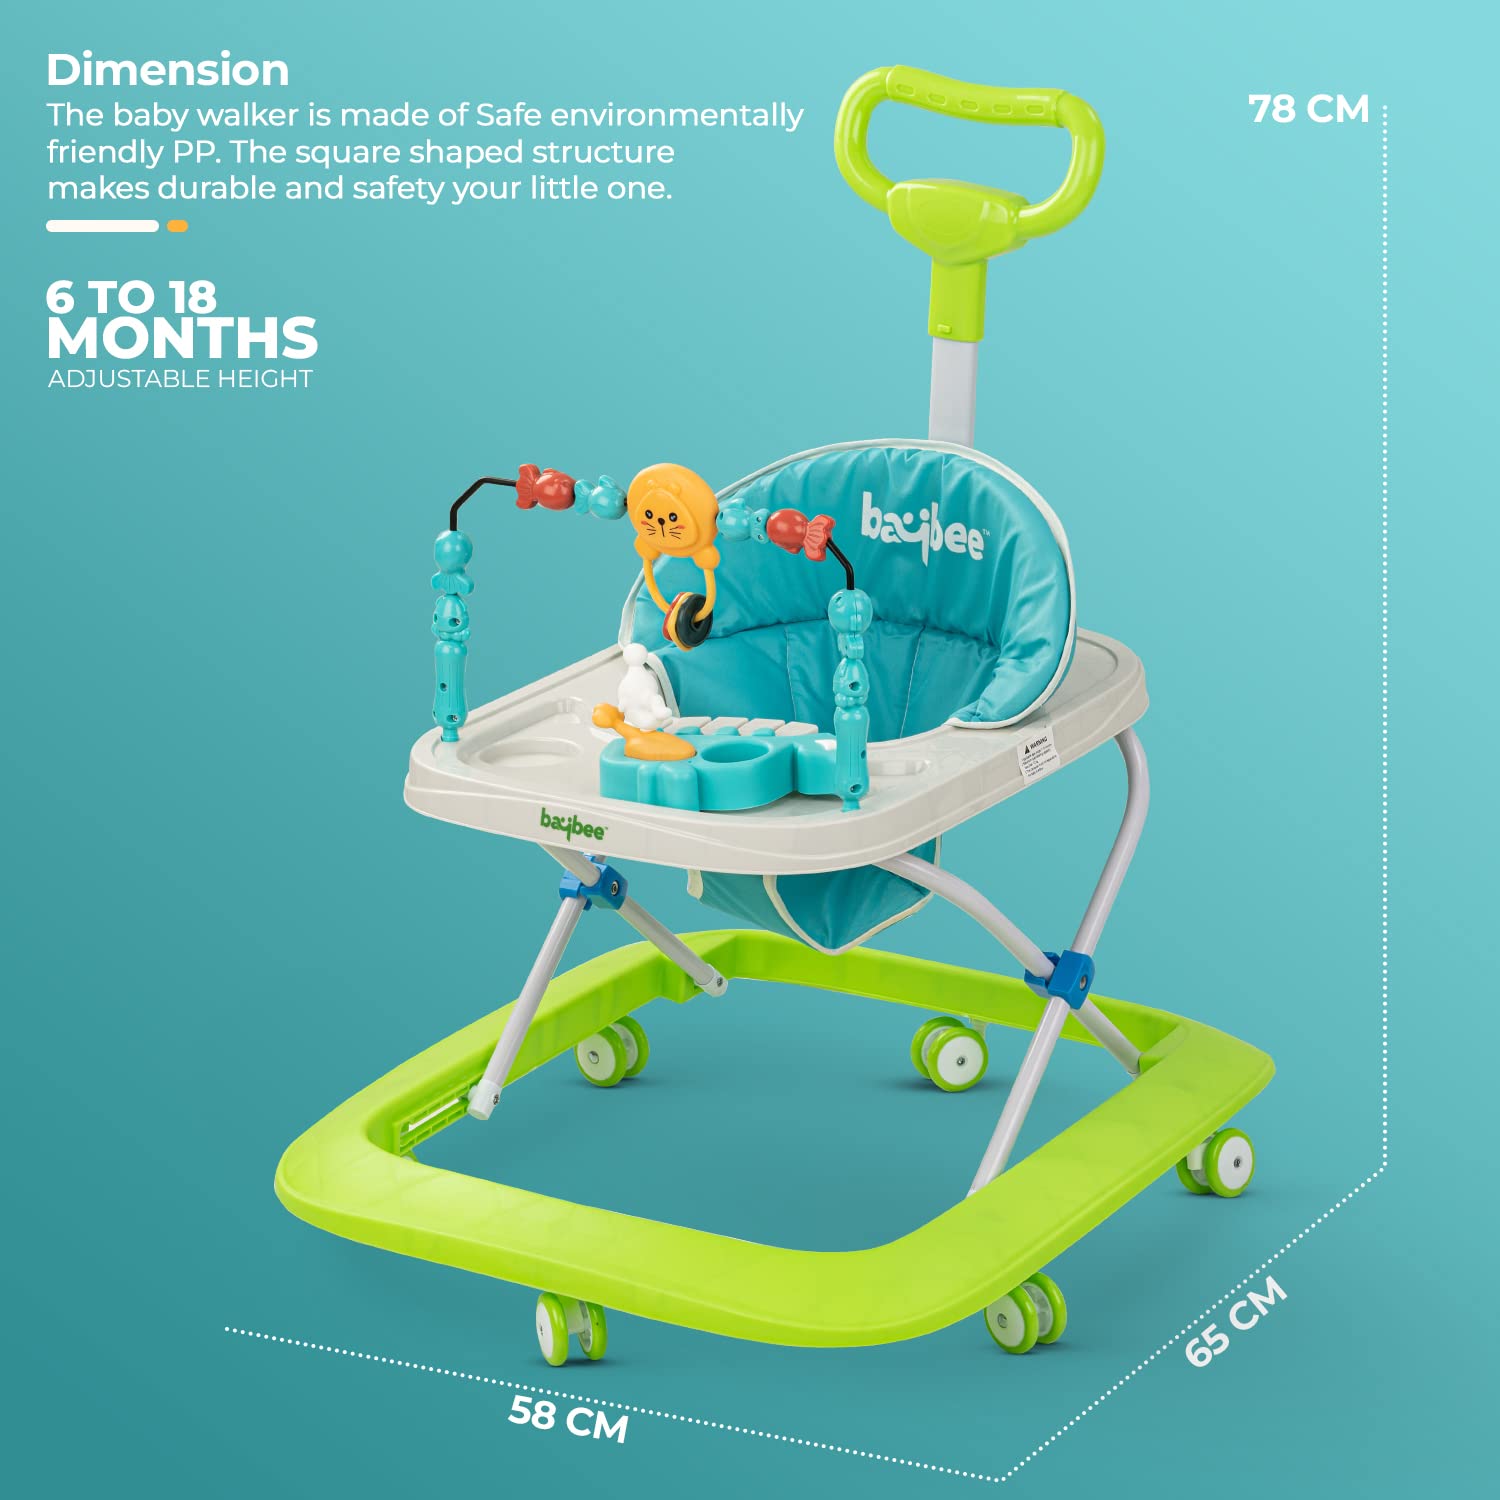 Minikin Nexus Baby Walker I Parental Control Handle I 2 Step Height Adjustment I Anti-Rollover Design I Musical Toy Bar I 6M - 24M